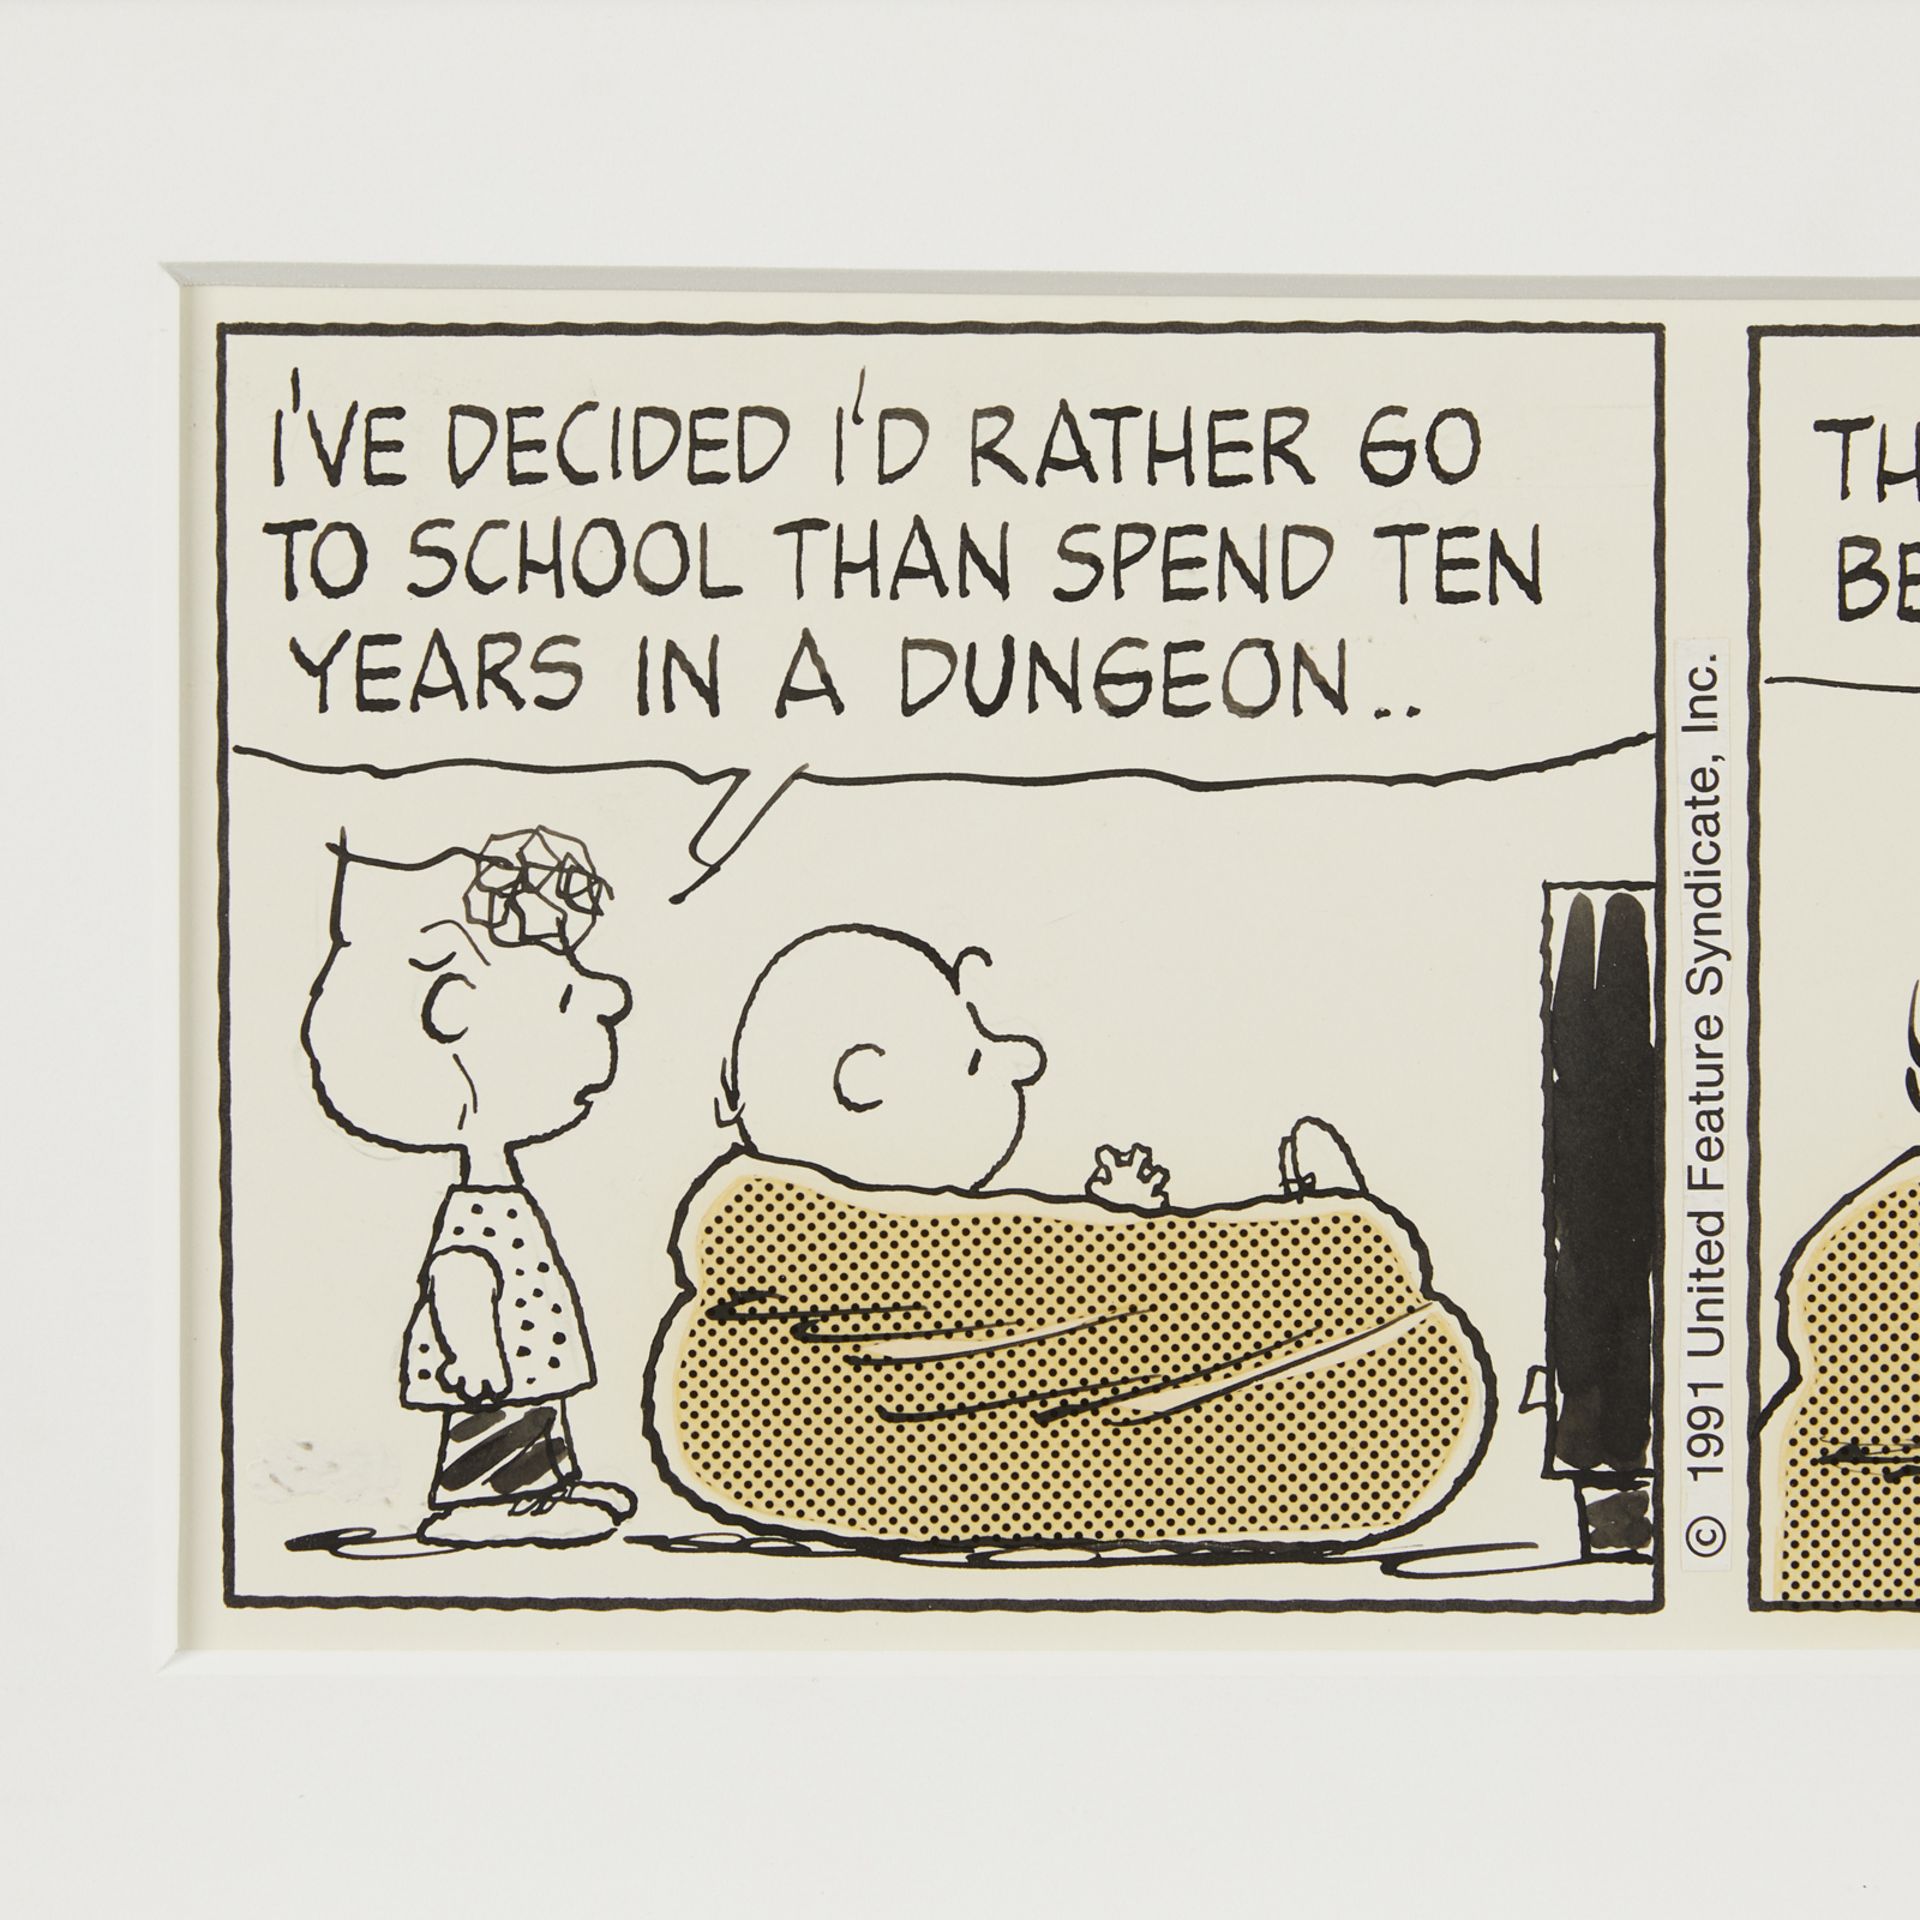 Charles Schulz Original Peanuts Comic Strip 1991 - Image 4 of 9